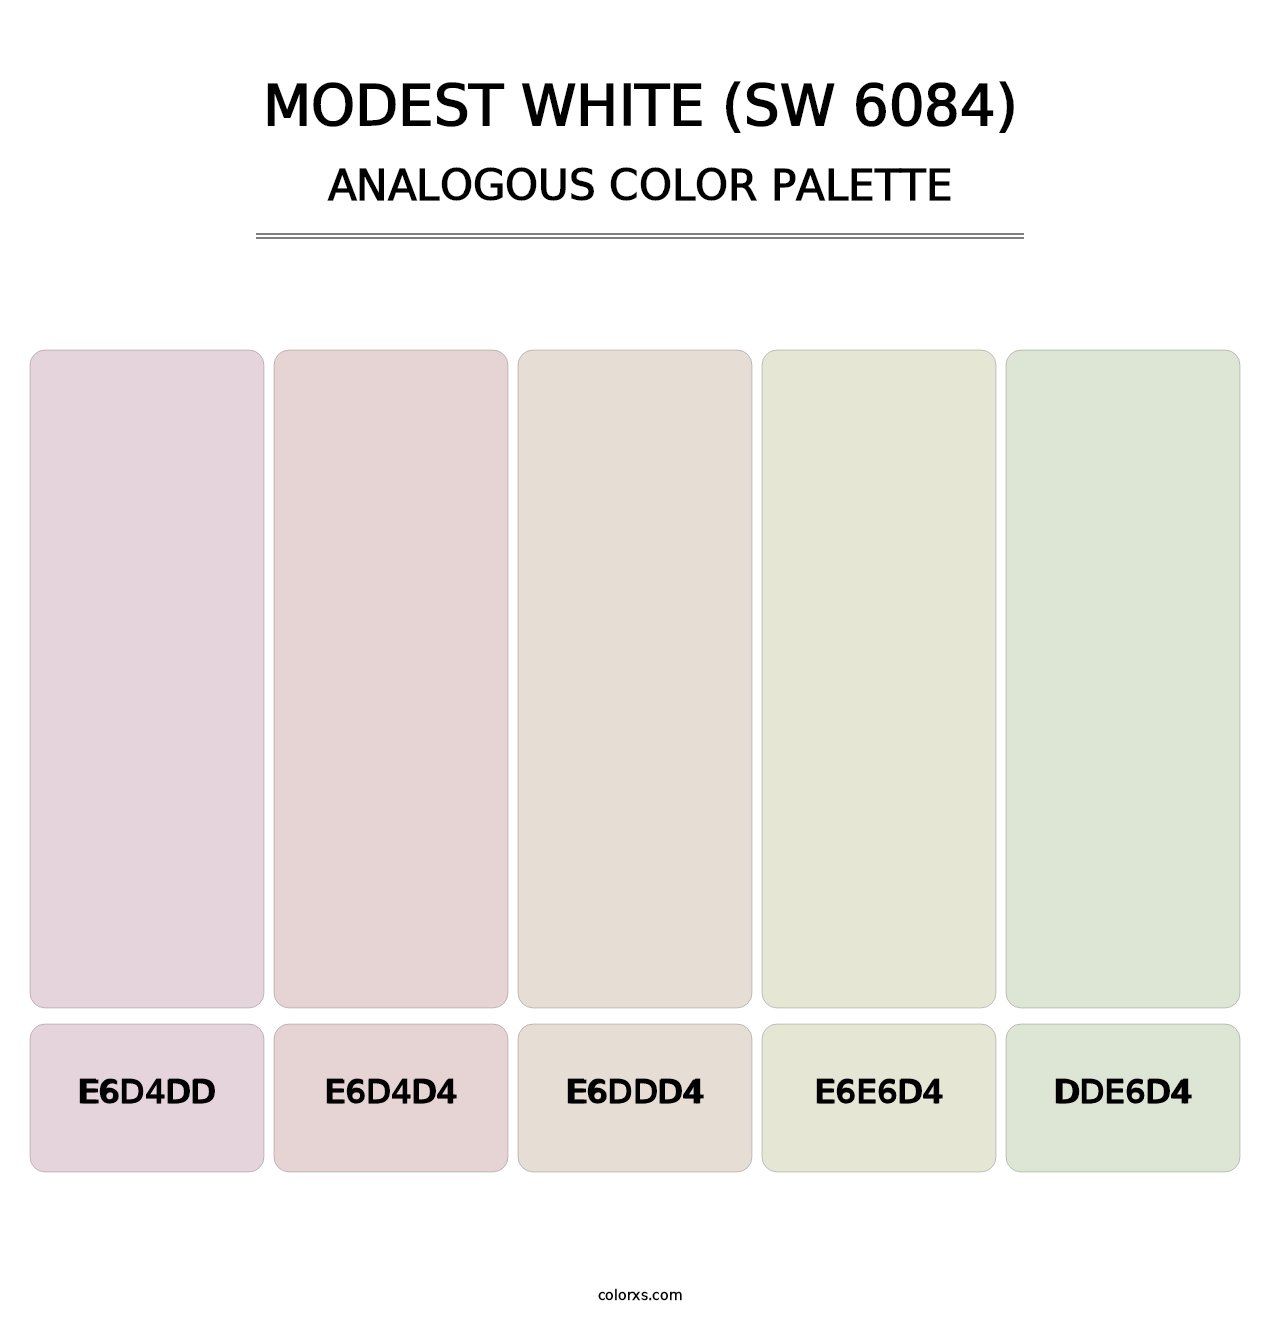 Modest White (SW 6084) - Analogous Color Palette